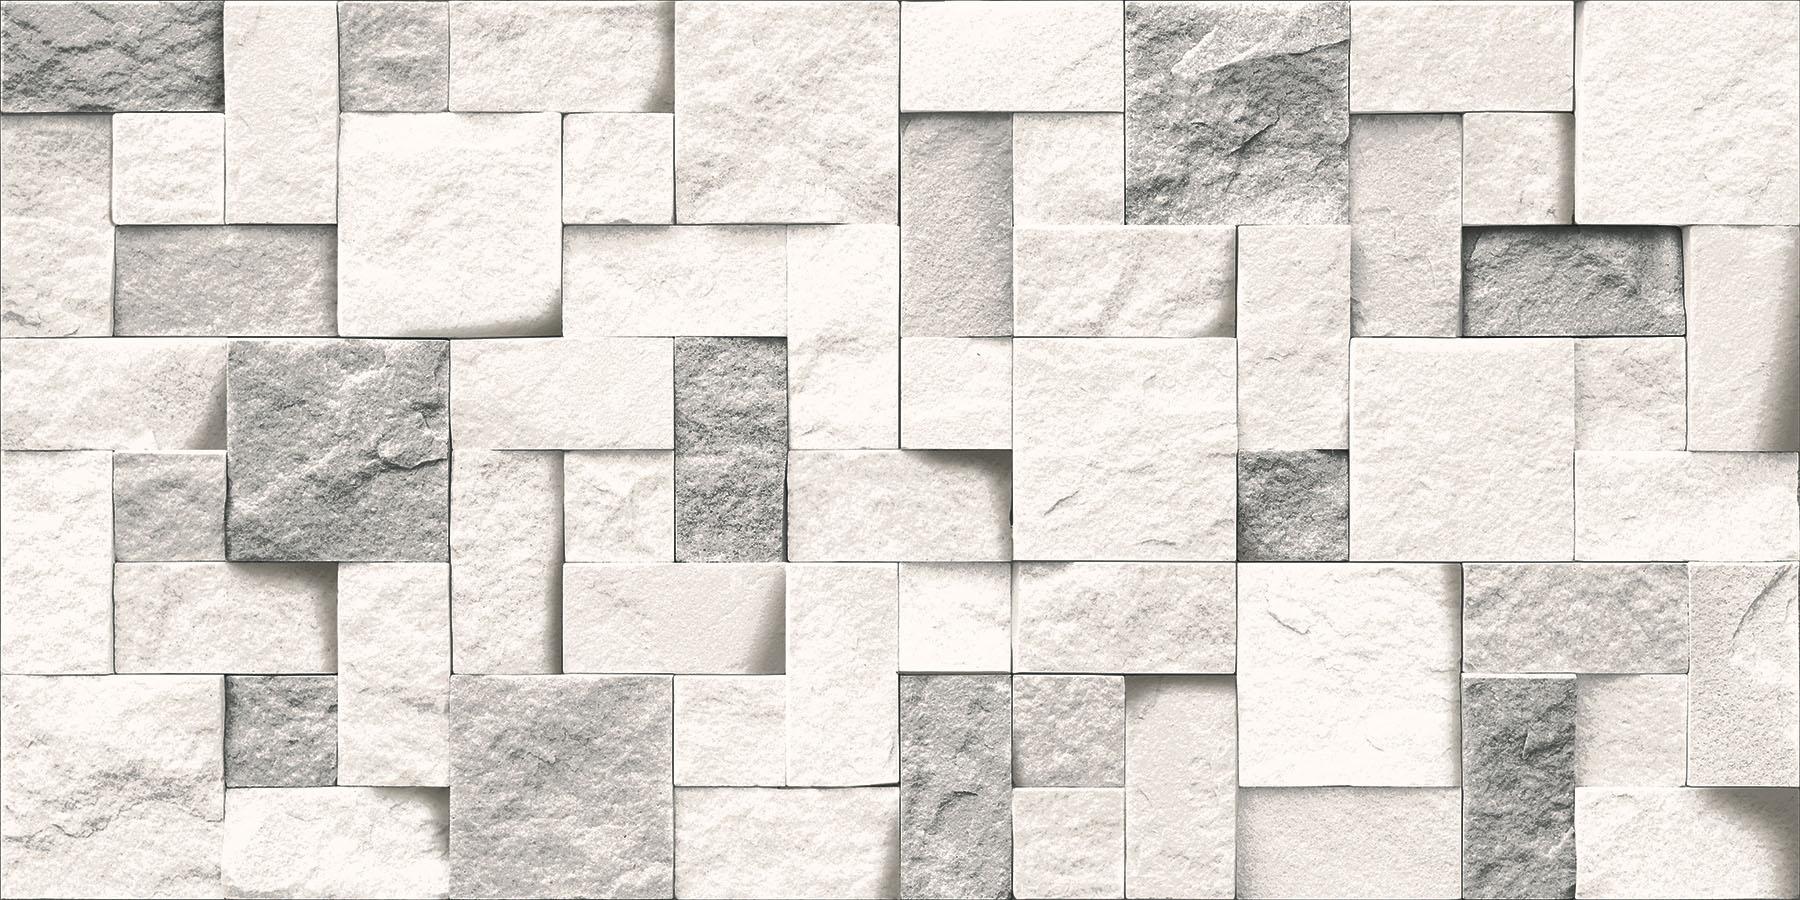 Glass Mosaic Tiles for Bathroom Tiles, Living Room Tiles, Elevation Tiles, Accent Tiles, Hospital Tiles, Bar/Restaurant, Commercial/Office, Outdoor Area, School & Collages